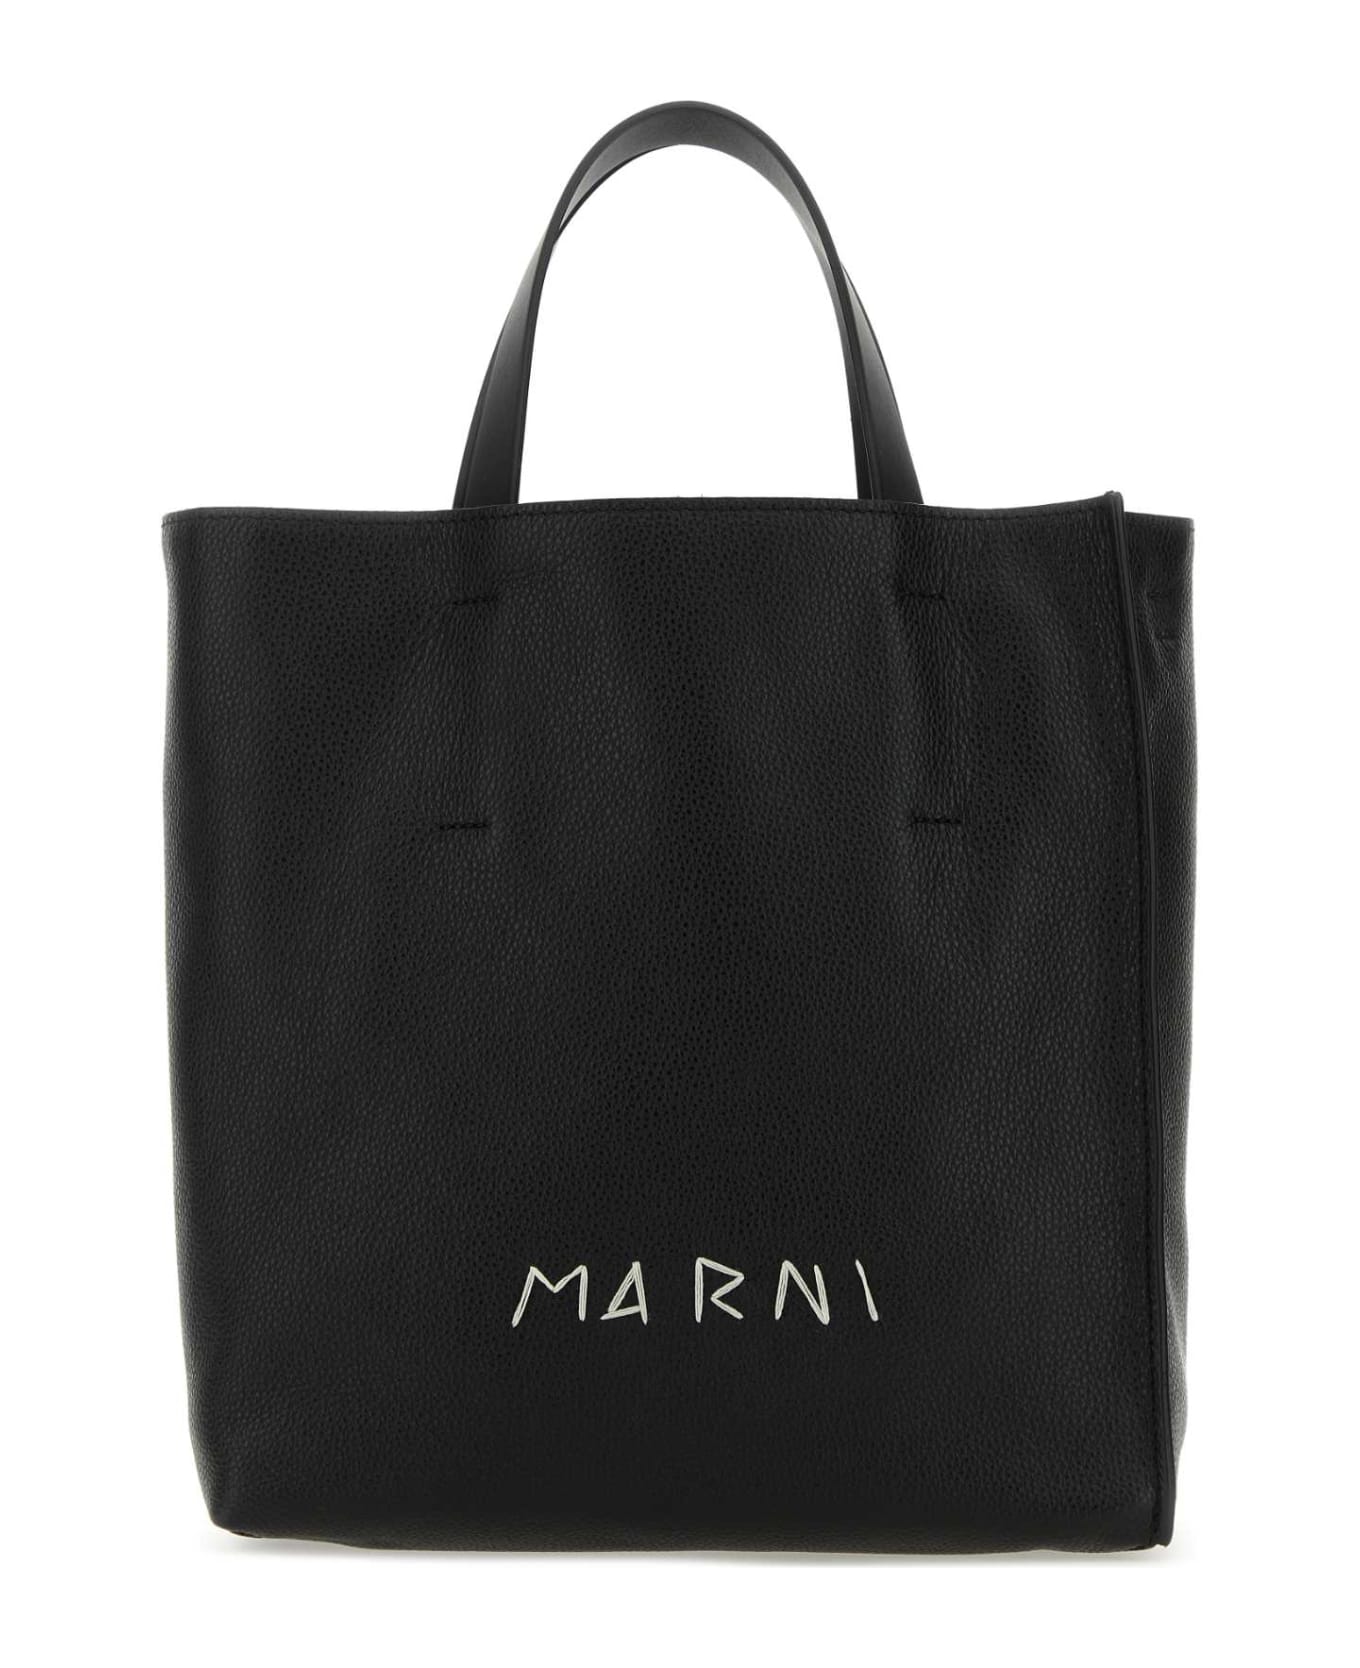 Marni Black Leather Small Museo Handbag - 00N99